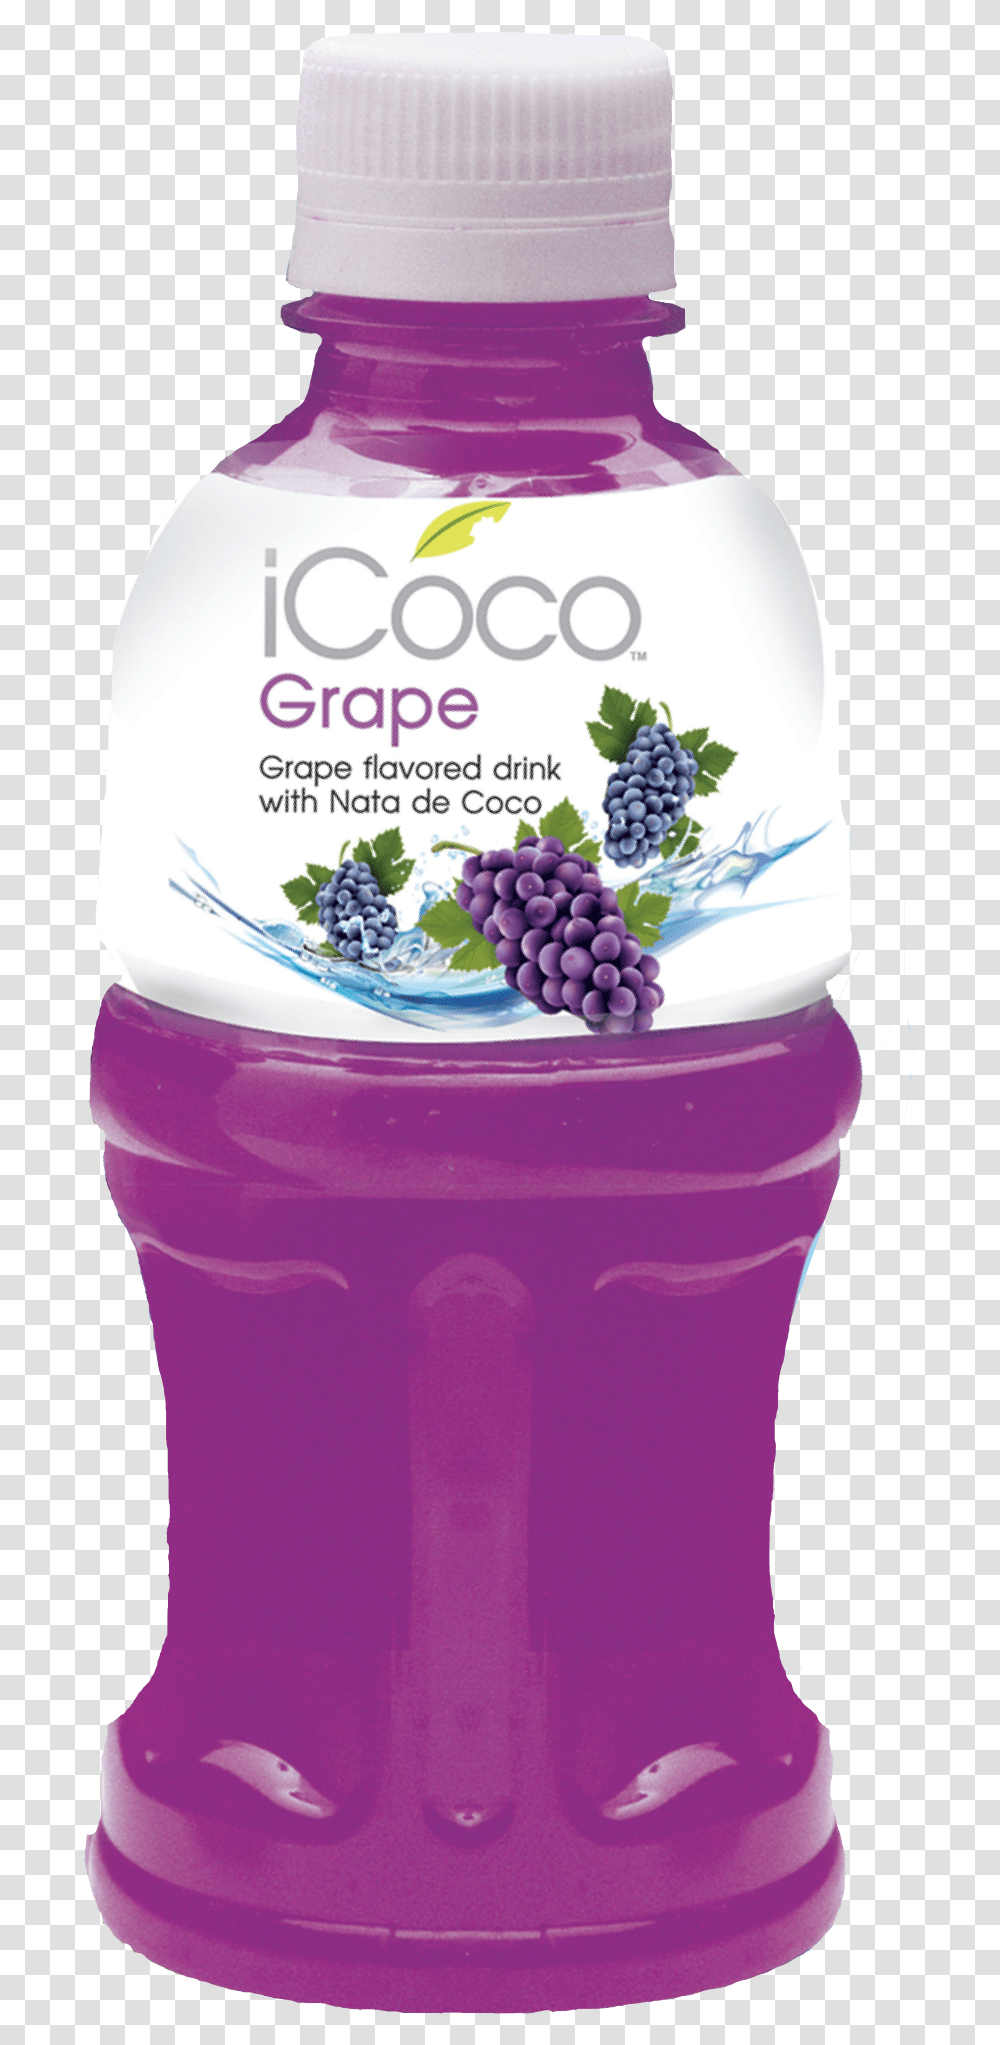 Icoco Fruit Juice With Nata De Coco Grapes Icoco Juice, Plant, Food, Wedding Cake, Dessert Transparent Png